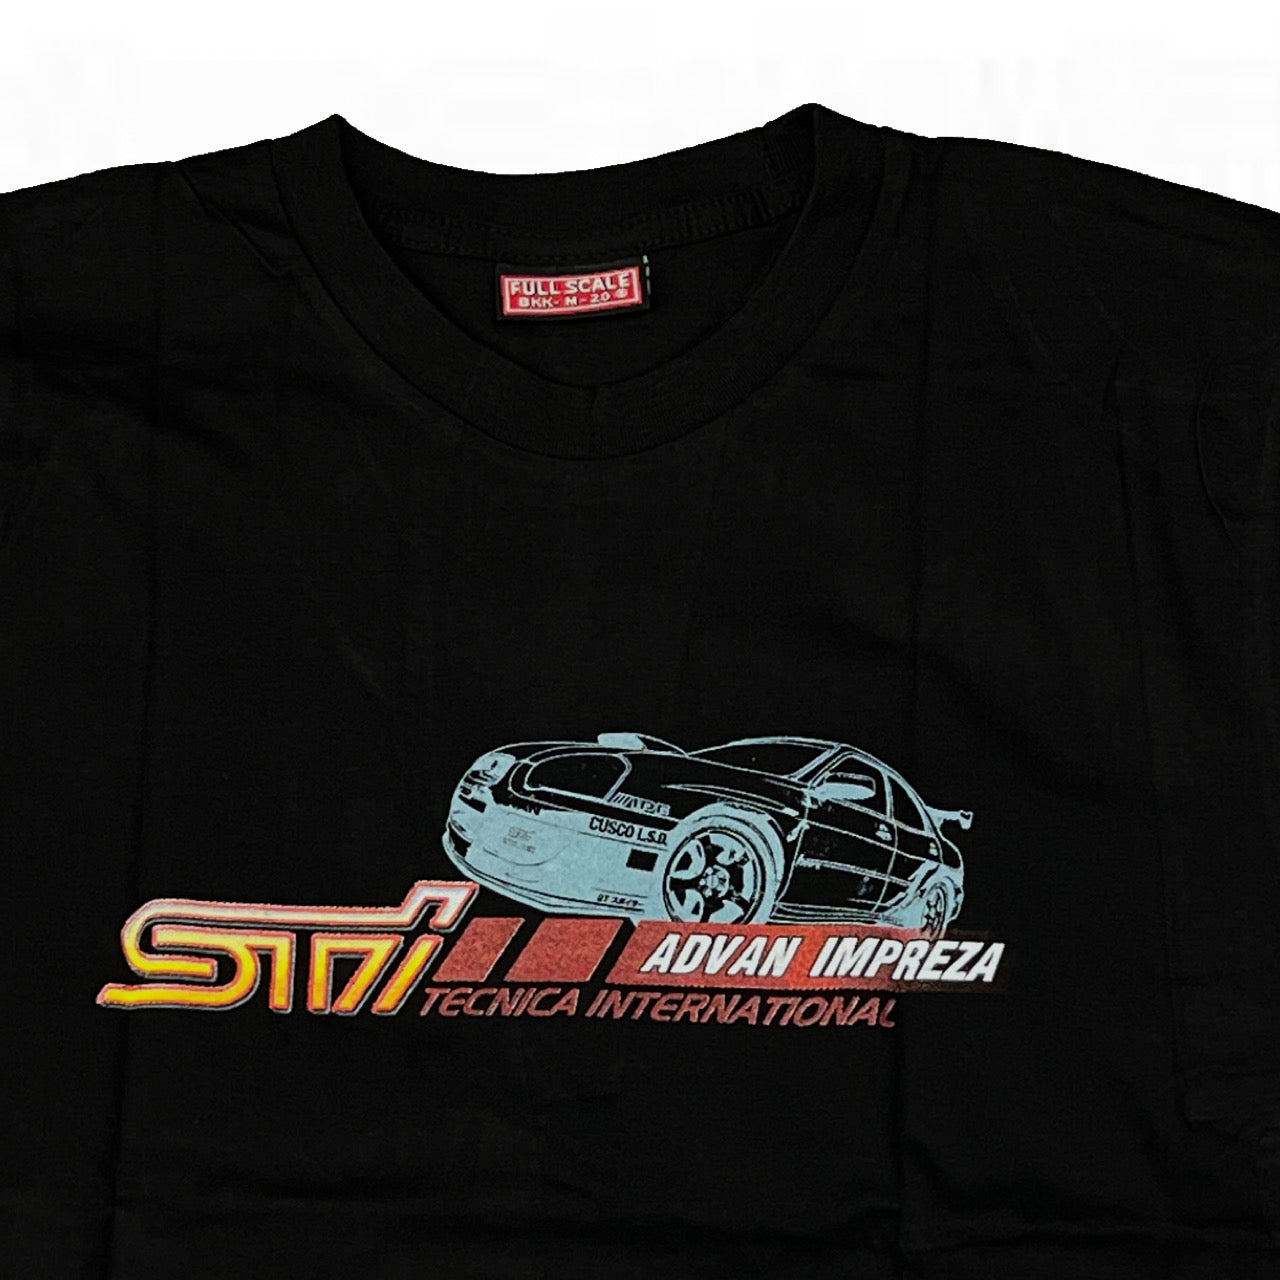 Advan Impreza Blobeye WRX STi Racing Hart Tecnica International T-shirt Black